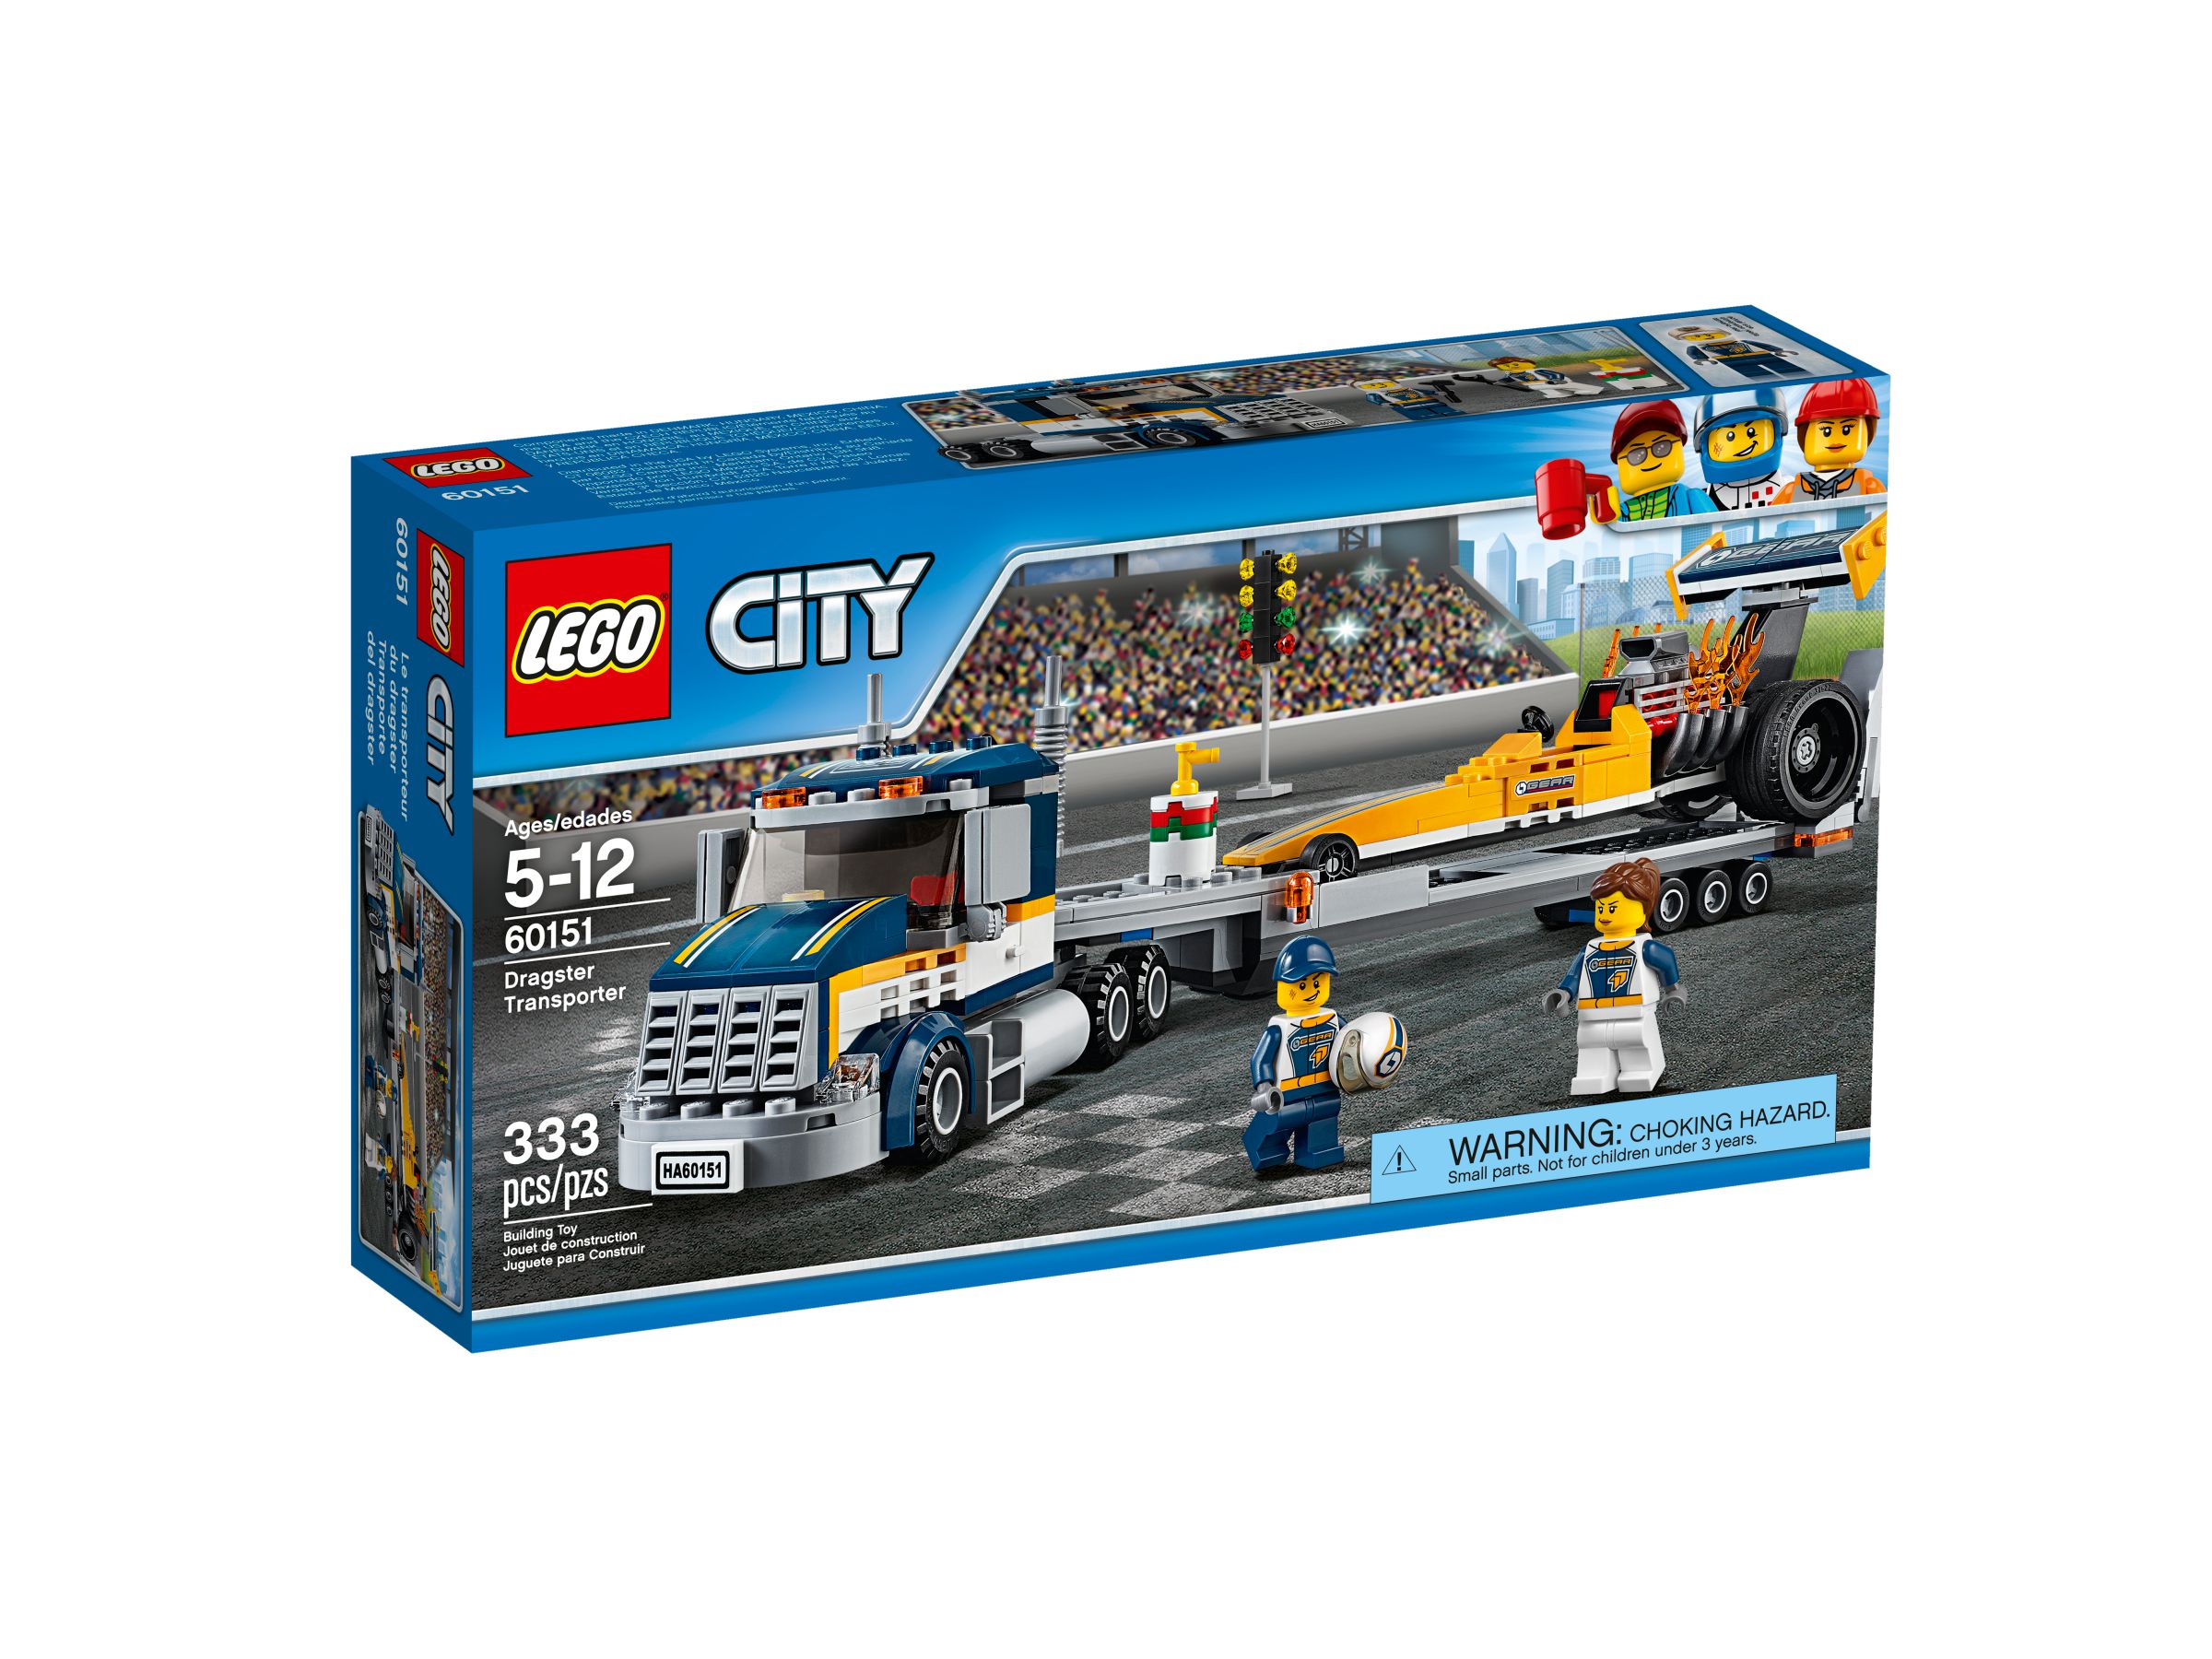 LEGO City 60151 Dragster-Transporter LEGO_60151_alt1.jpg